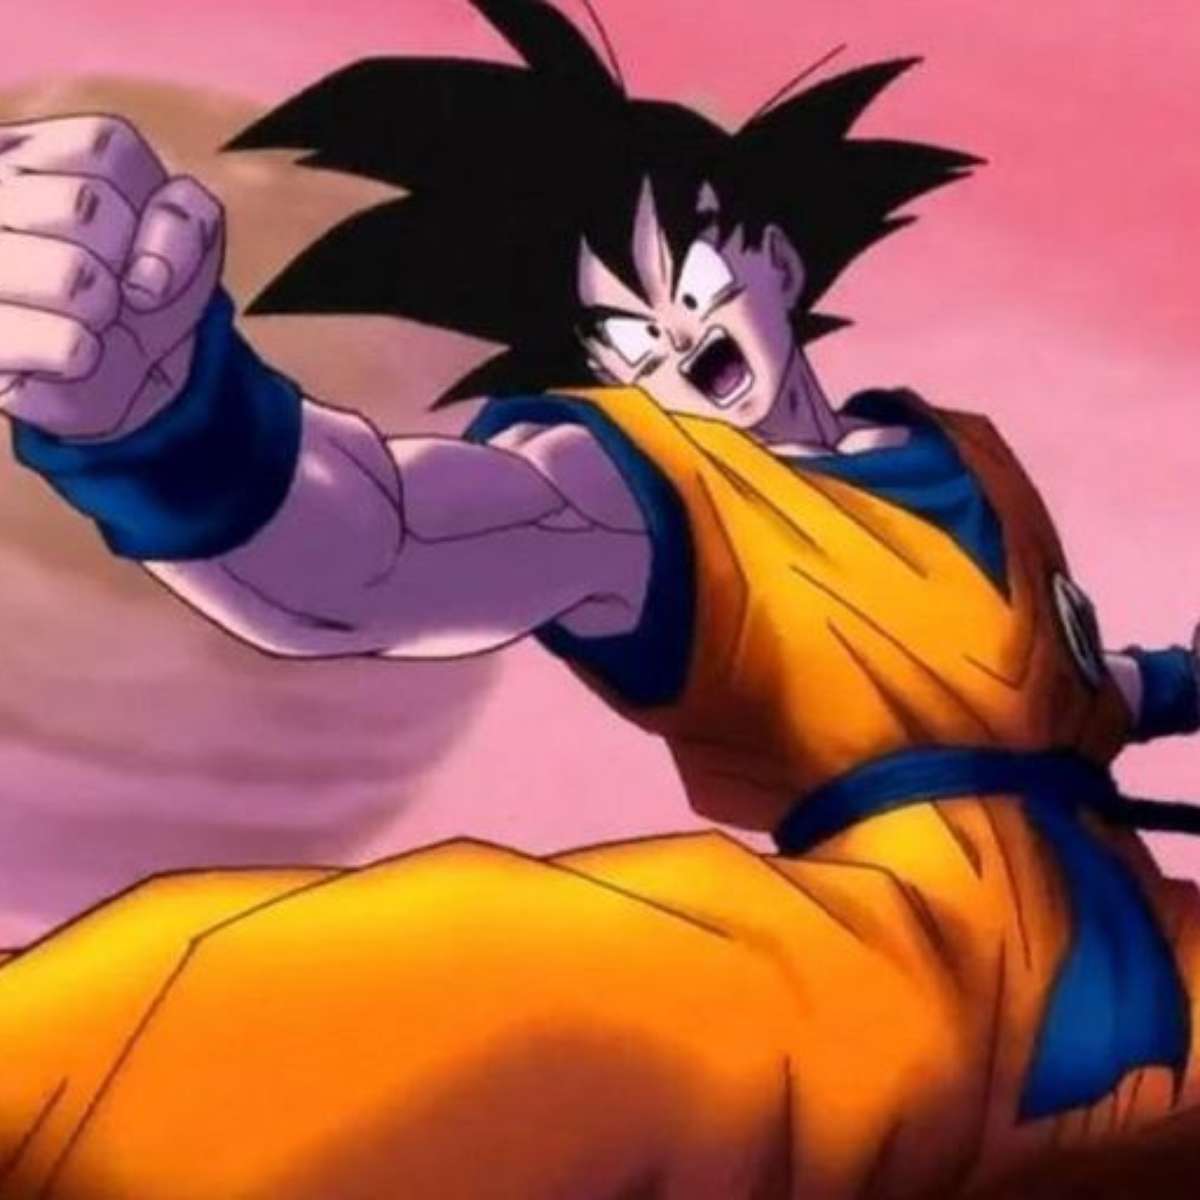 Novo filme da saga, Dragon Ball Super: Super Hero chega ao streaming